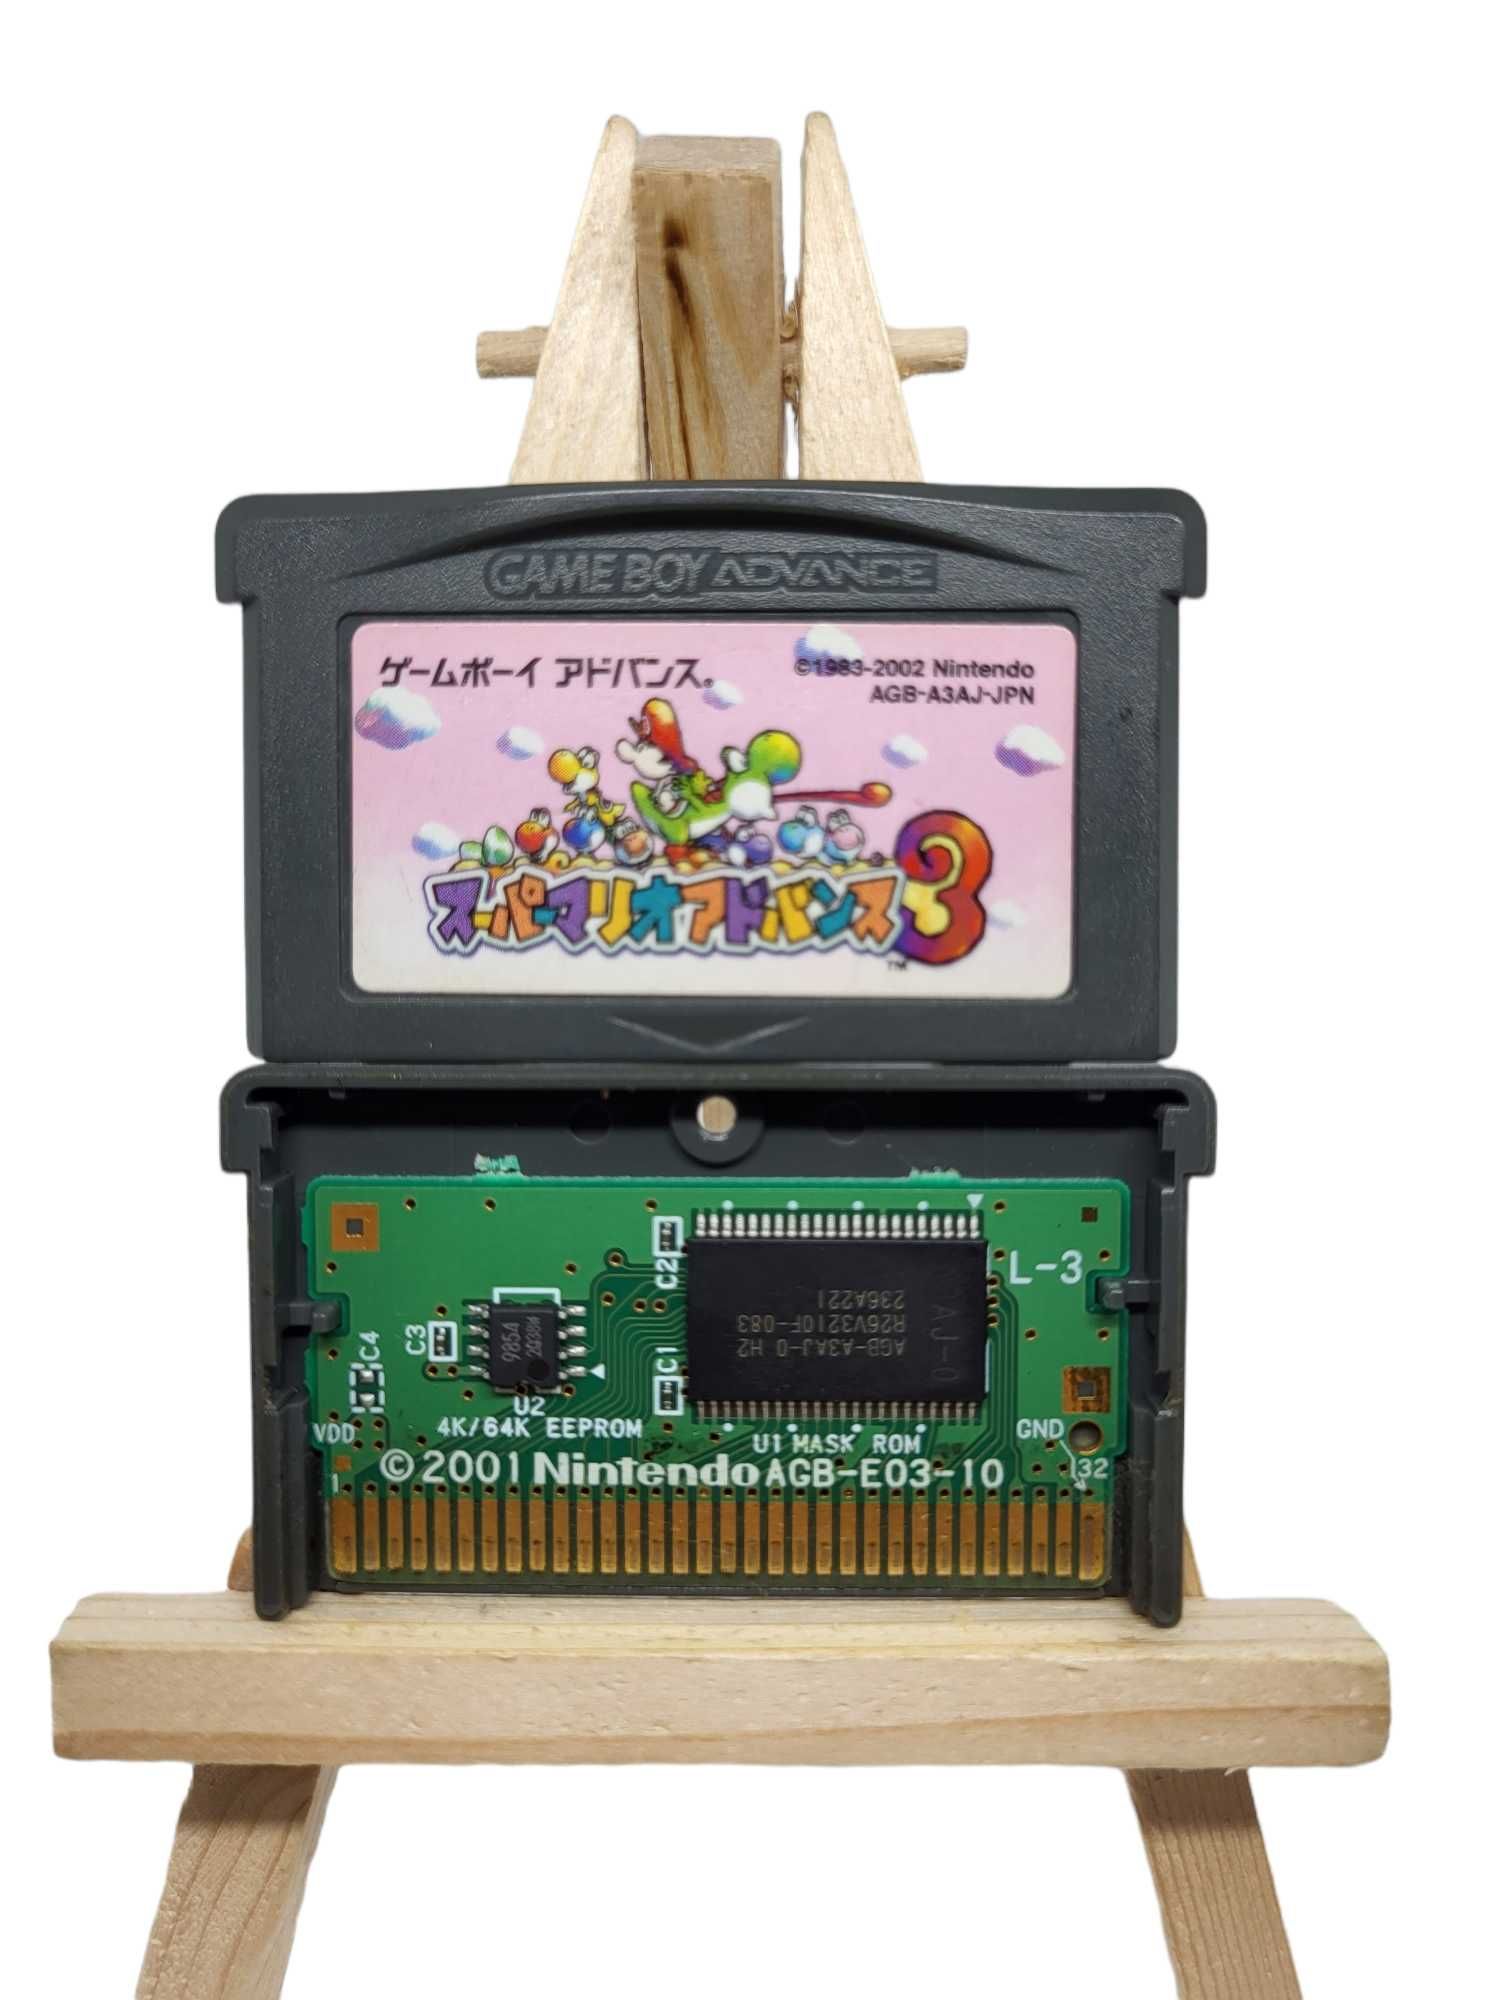 Super Mario 3 Game Boy Gameboy Advance GBA